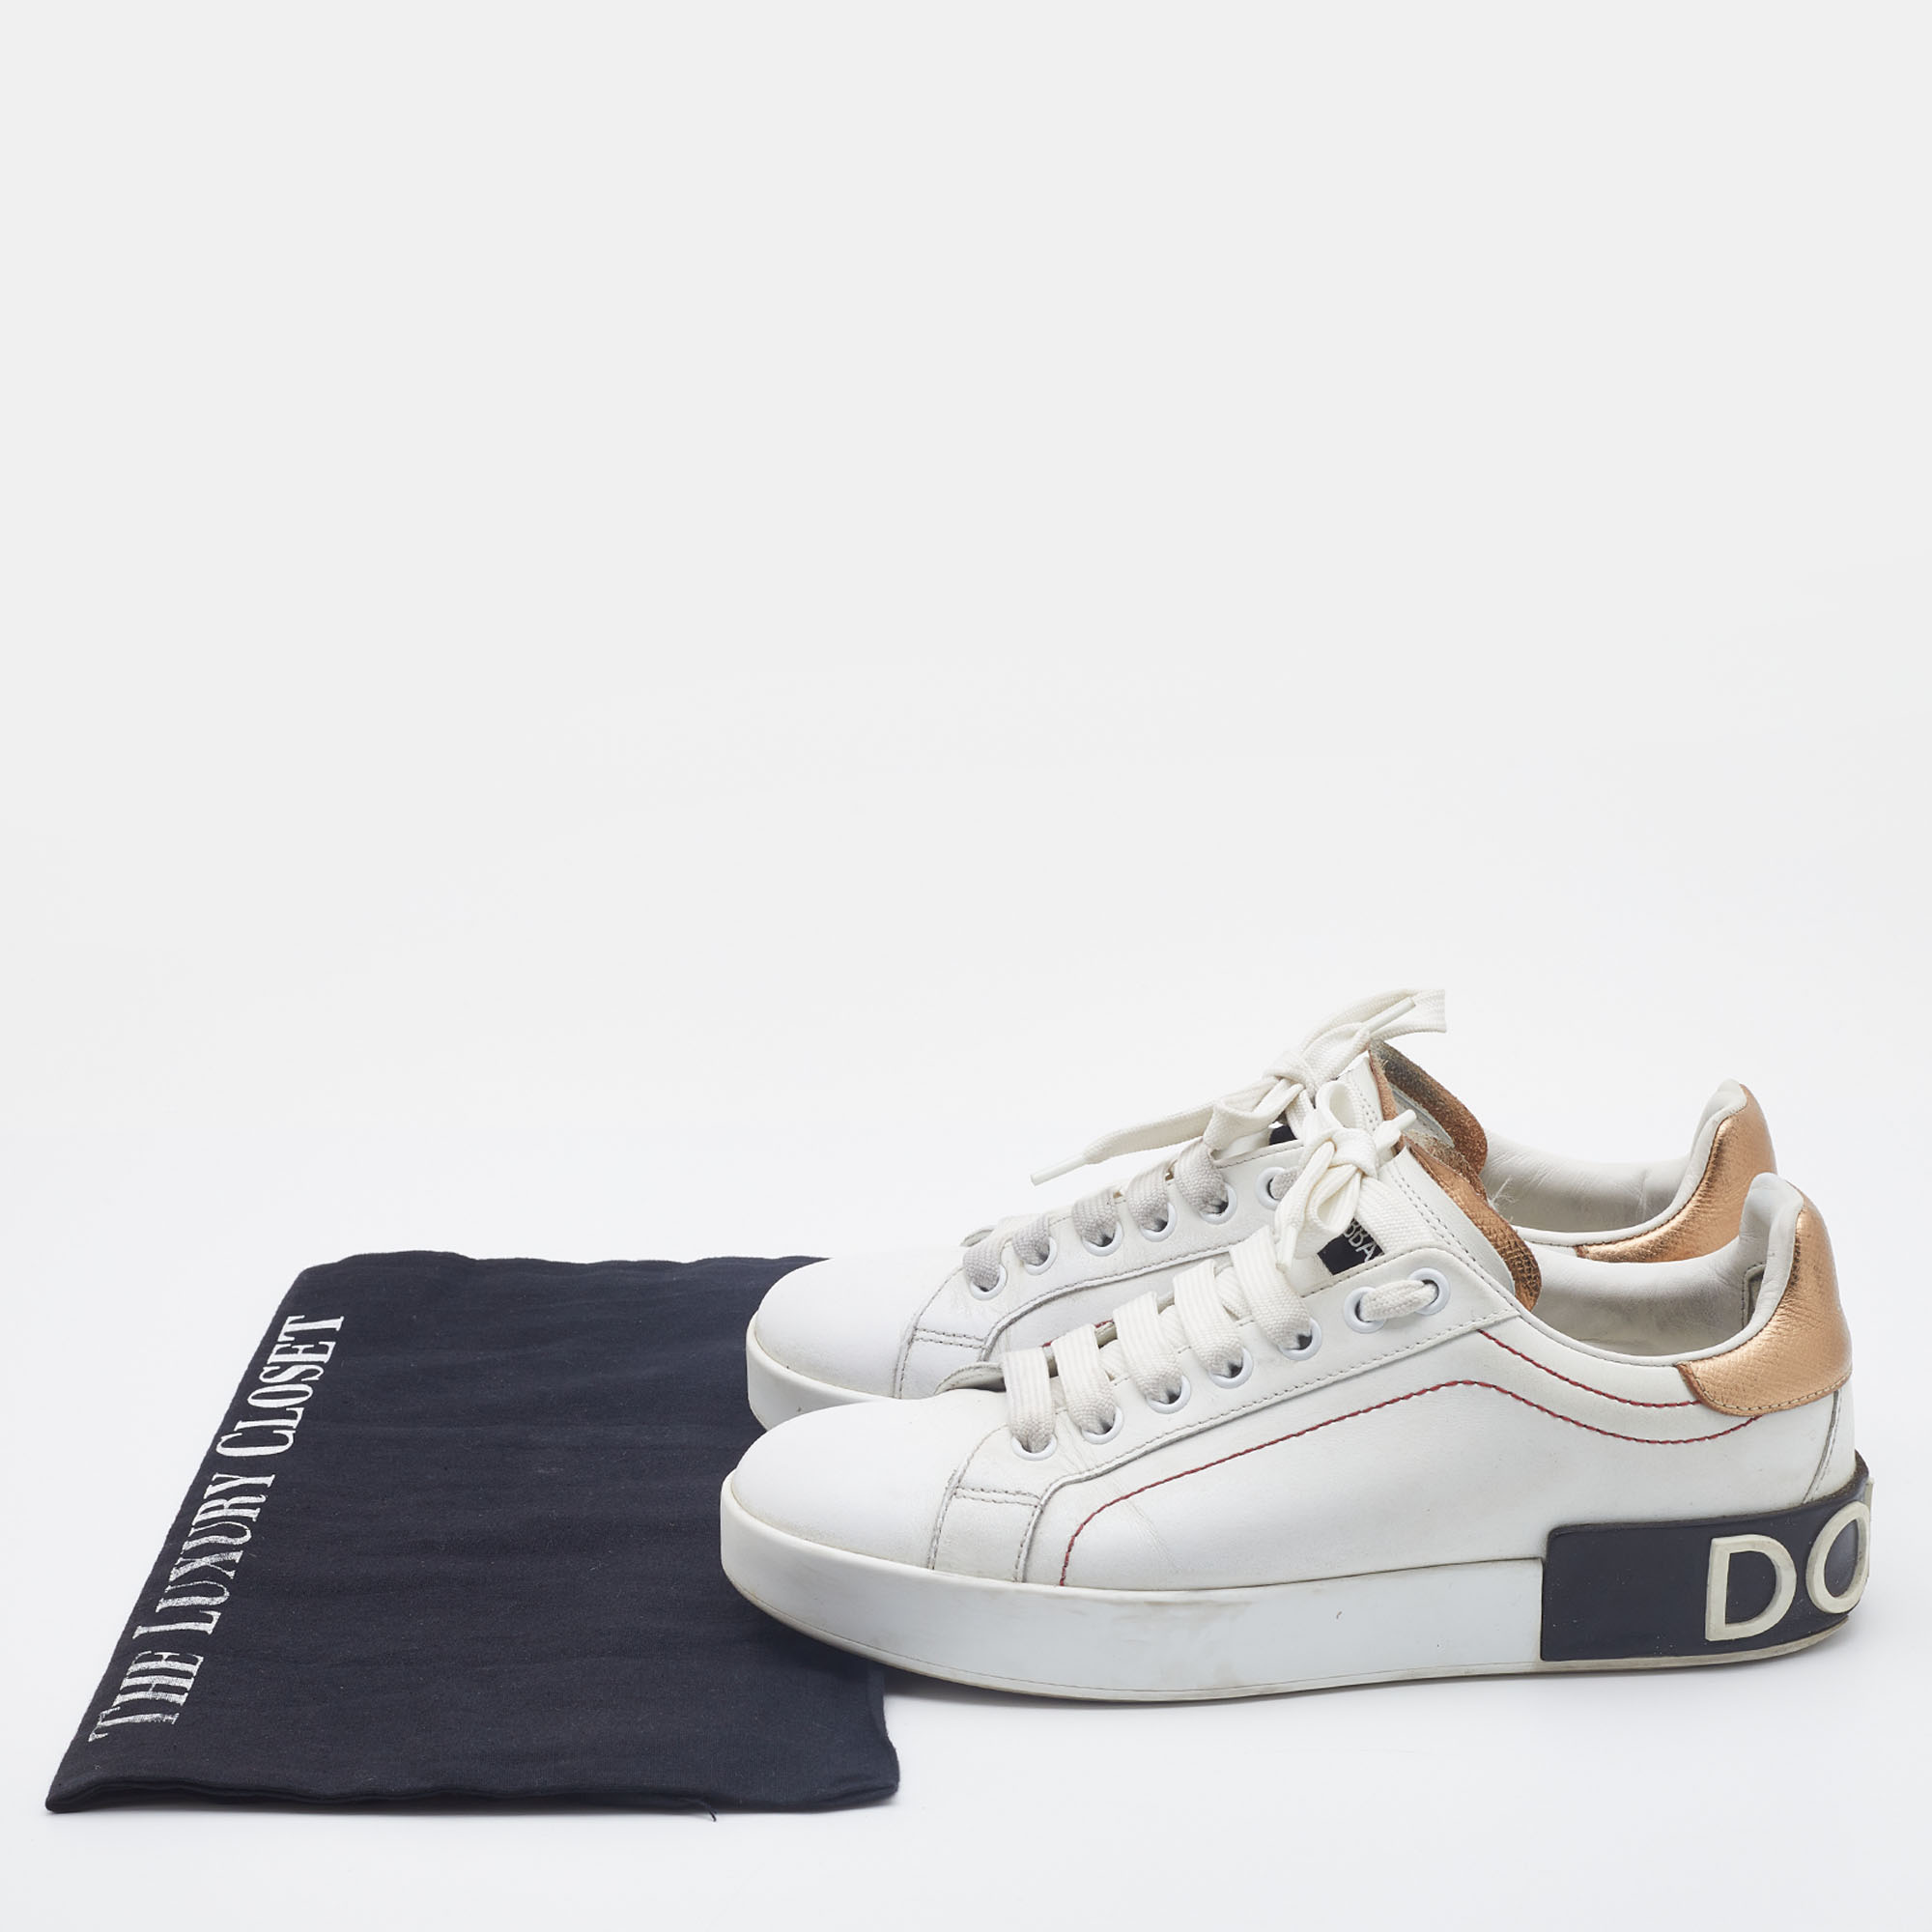 Dolce & Gabbana White Leather Portofino Low Top Sneakers Size 36